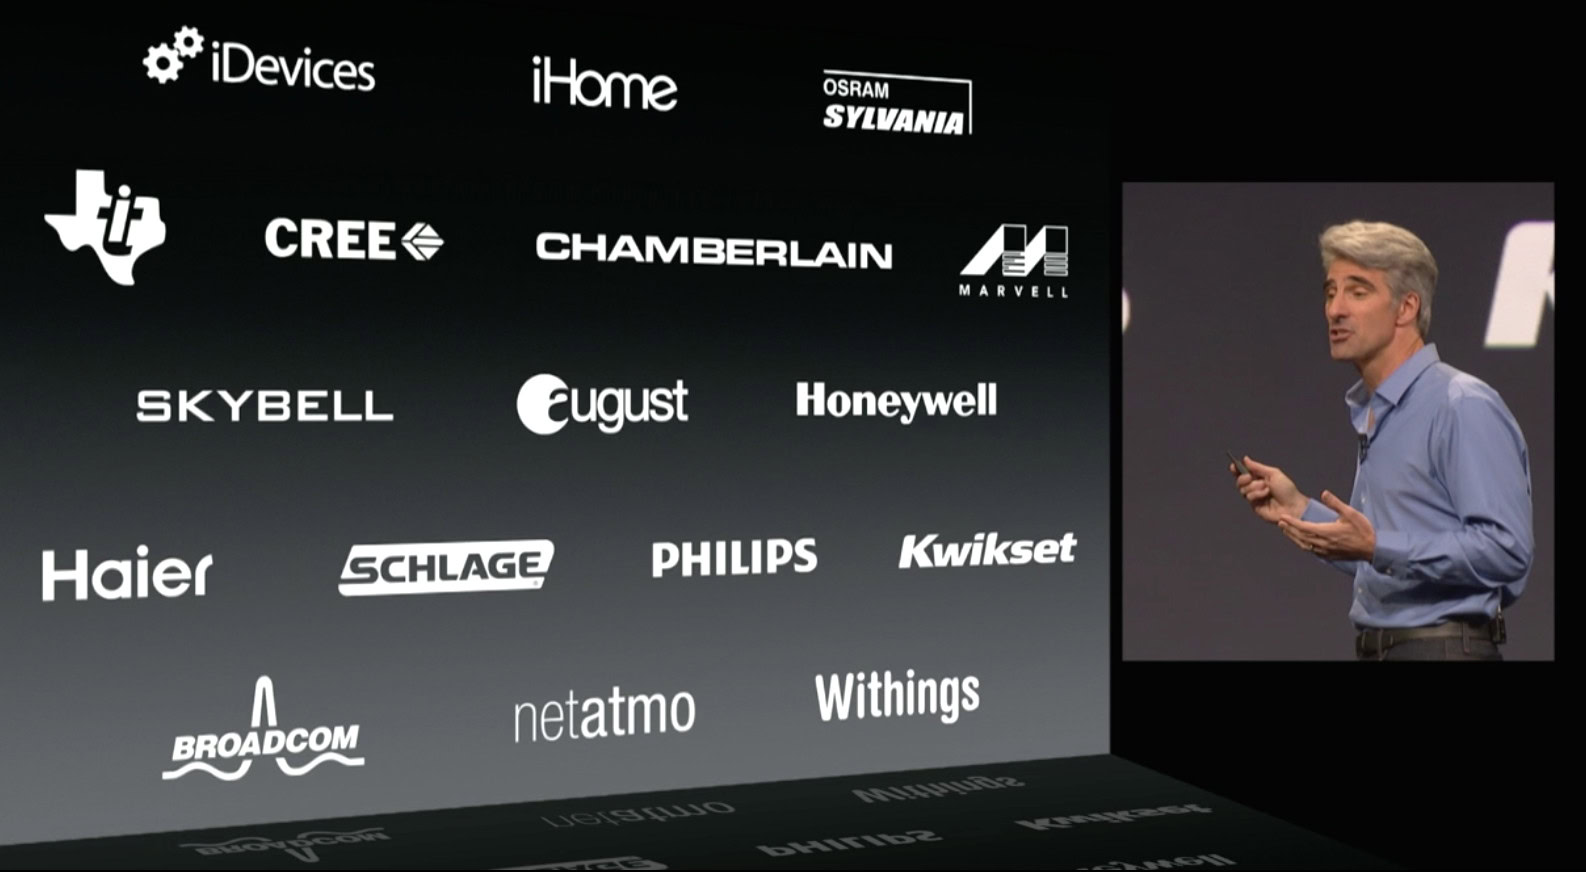 Apple enlisted several big names for its HomeKit program